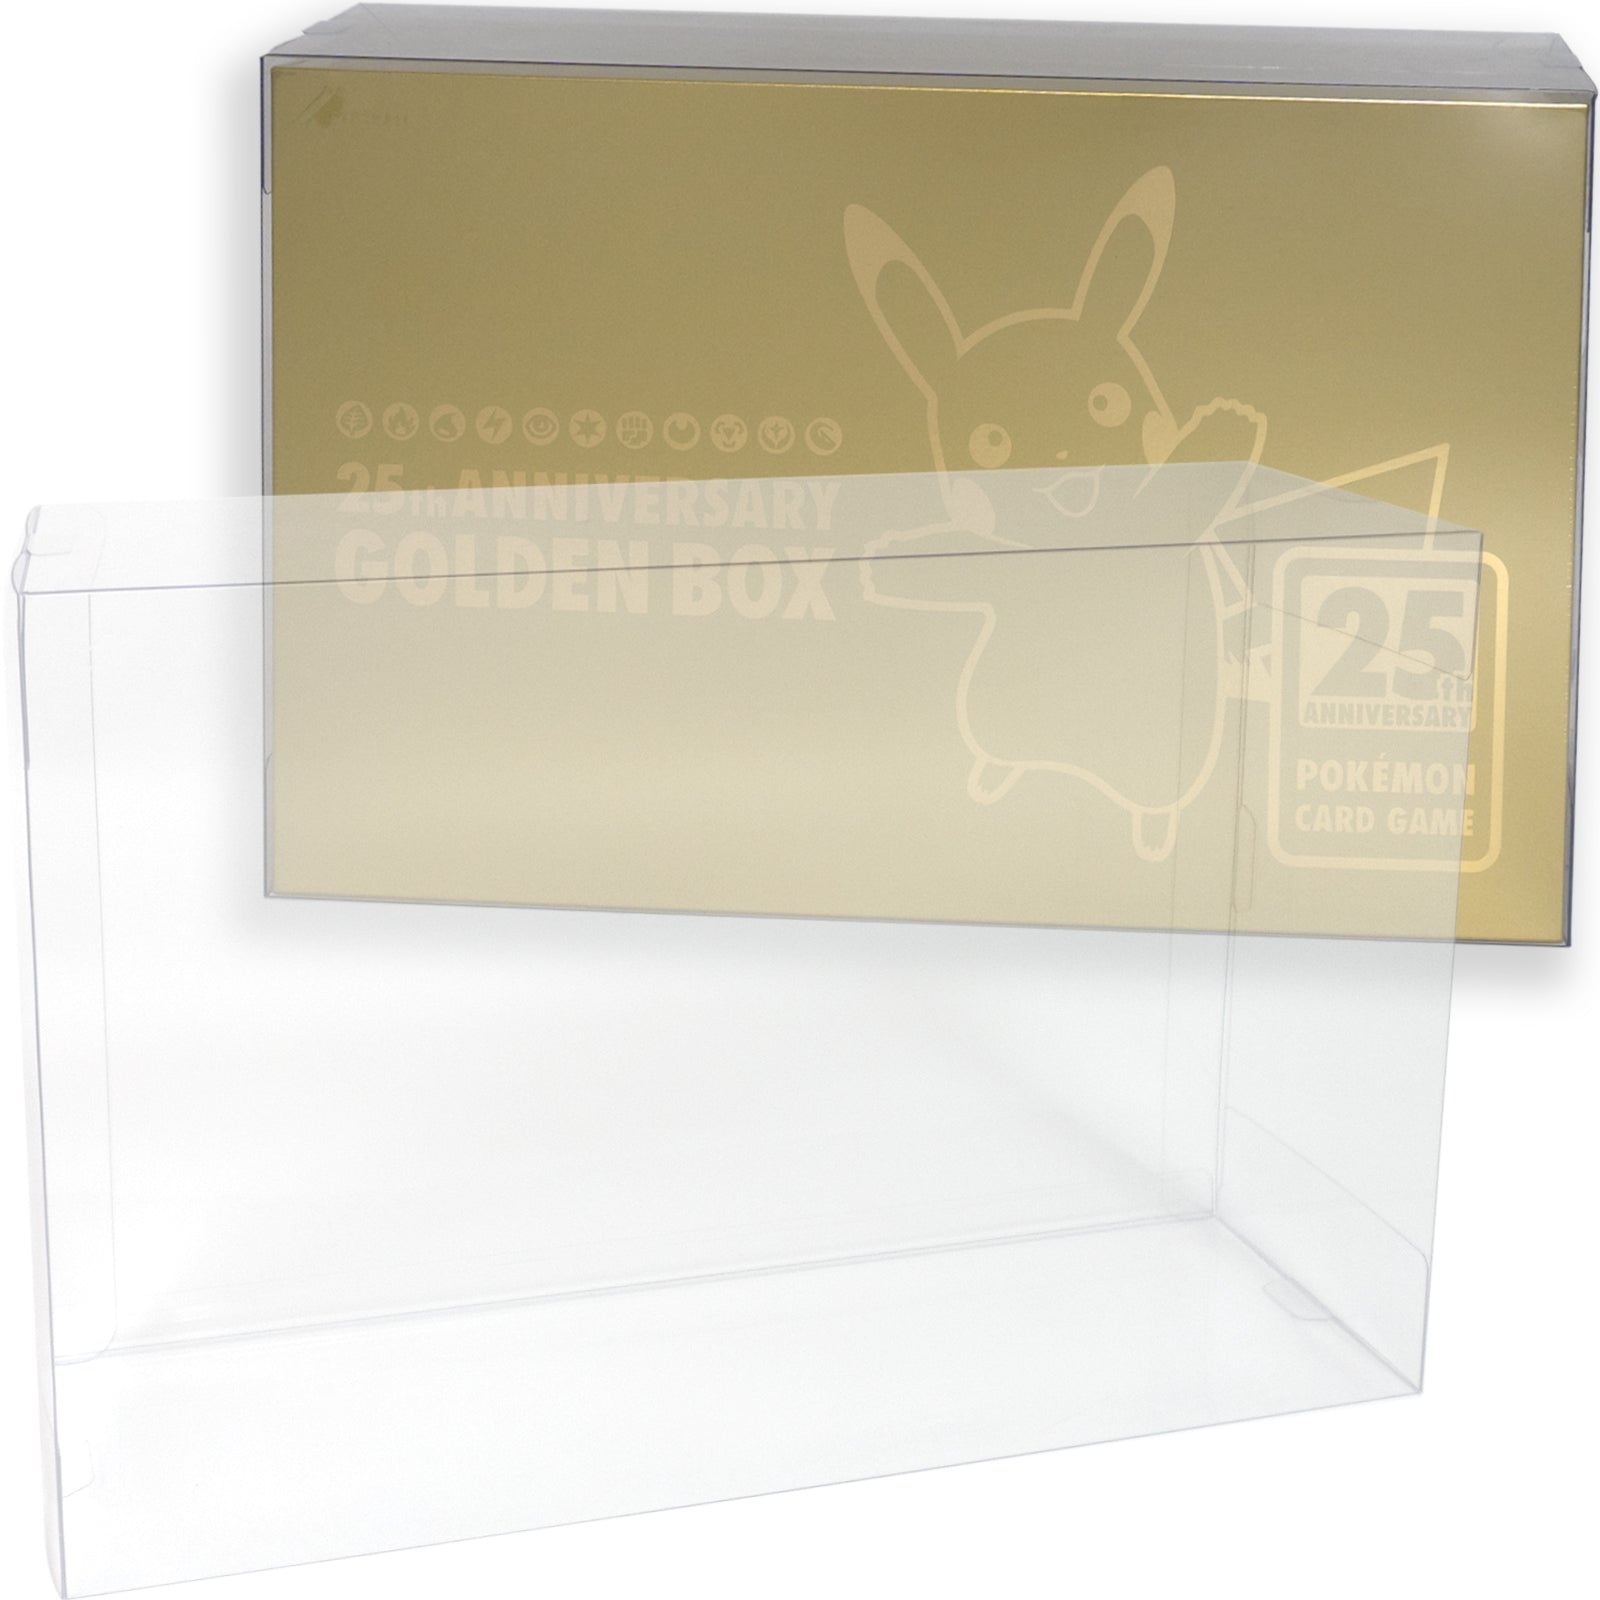 Boxx Guardian ポケモンカードBOX用 25th ANNIVERSARY GOLDEN BOX